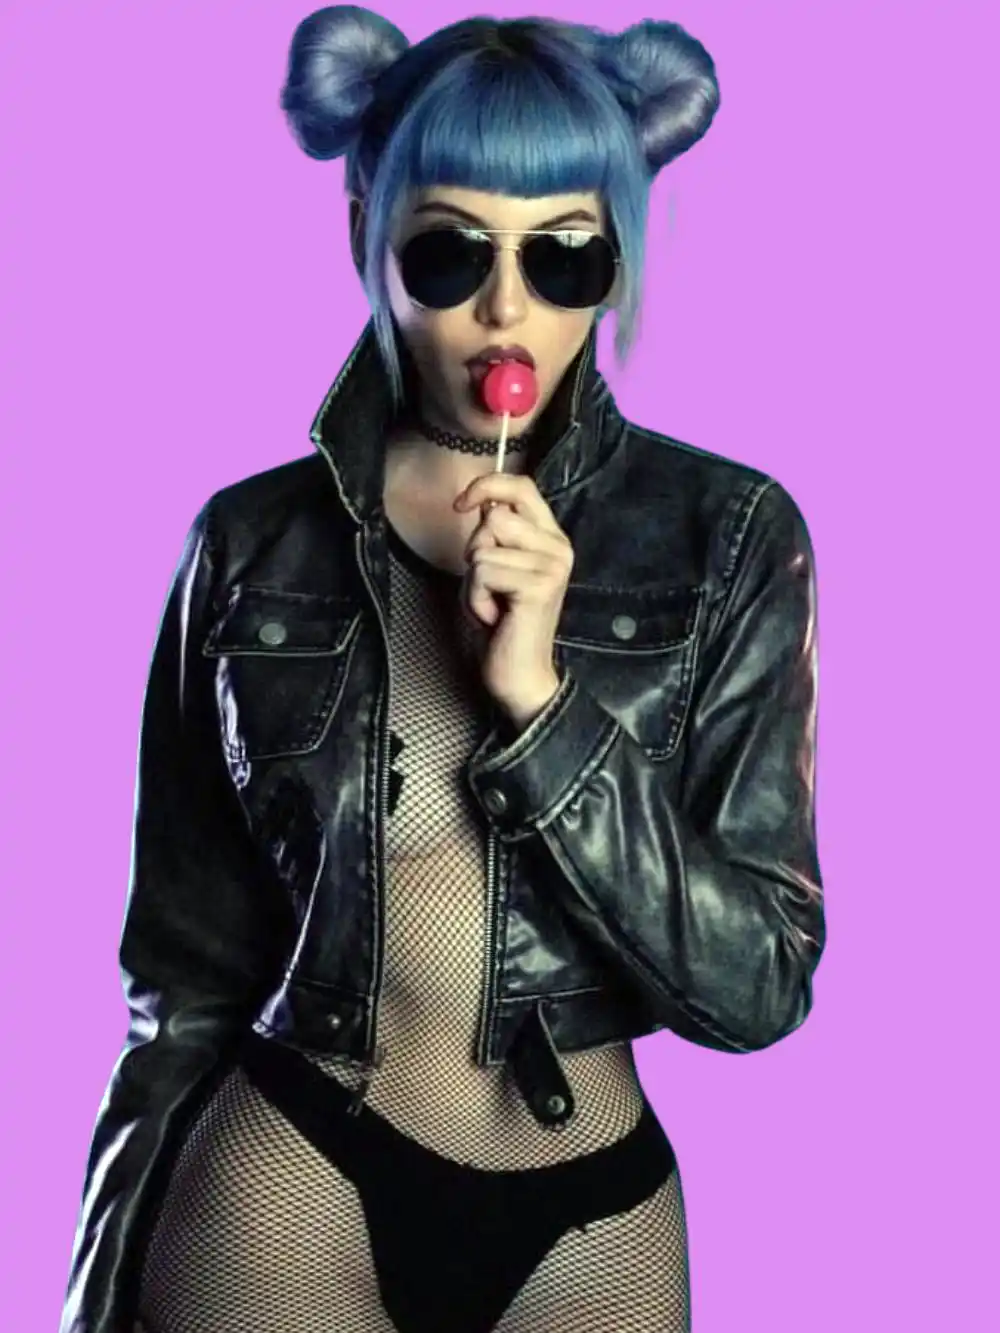 Rave fashion girl eating a lollipop